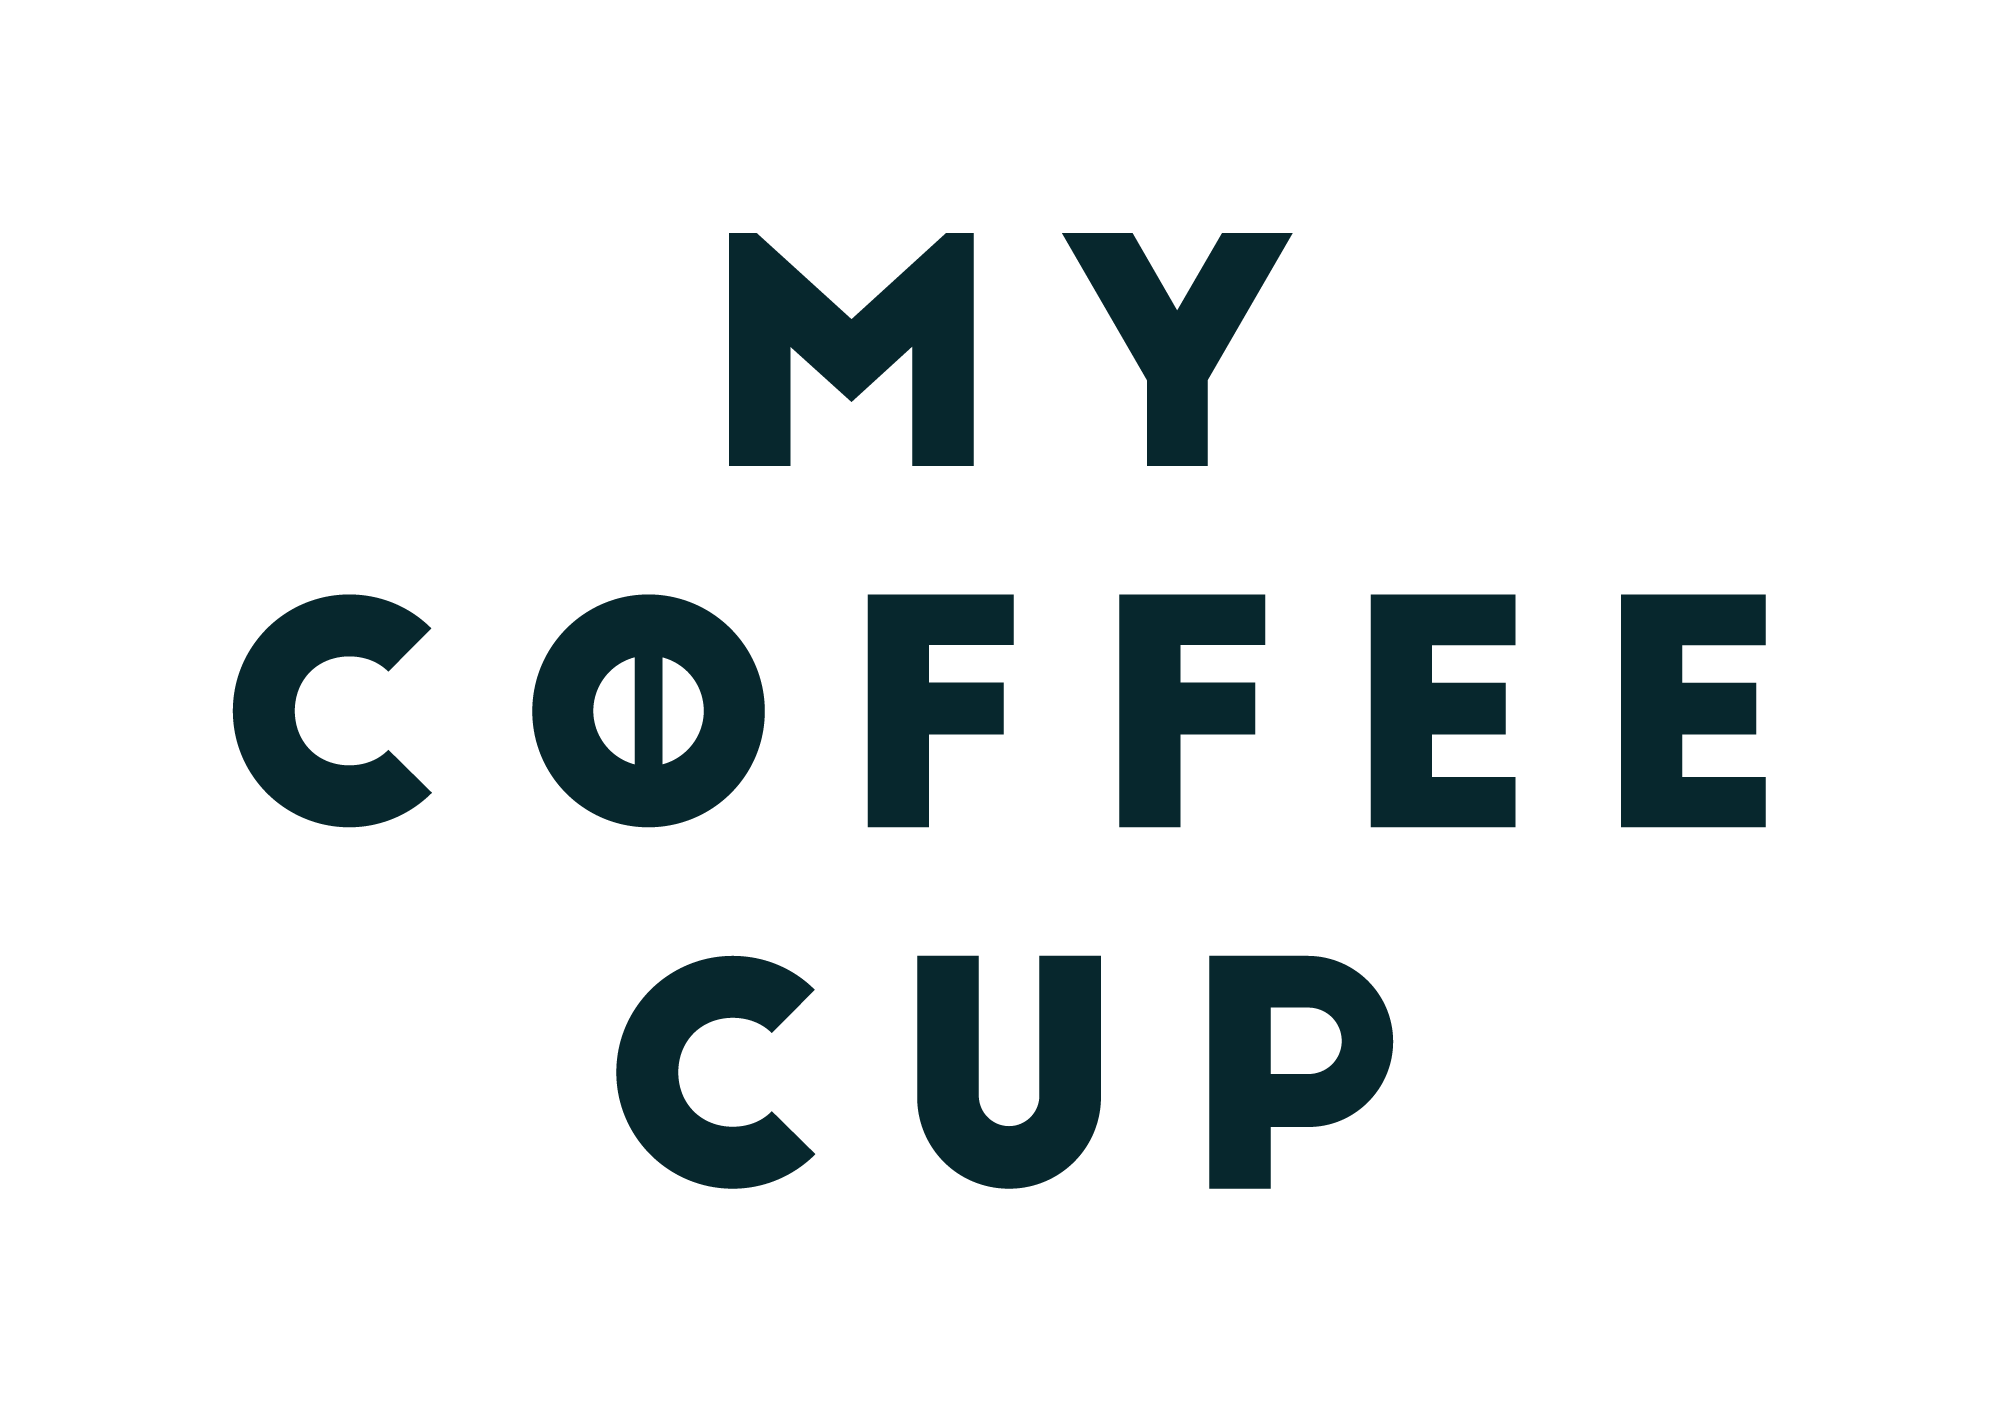 My Coffee Cup Logo